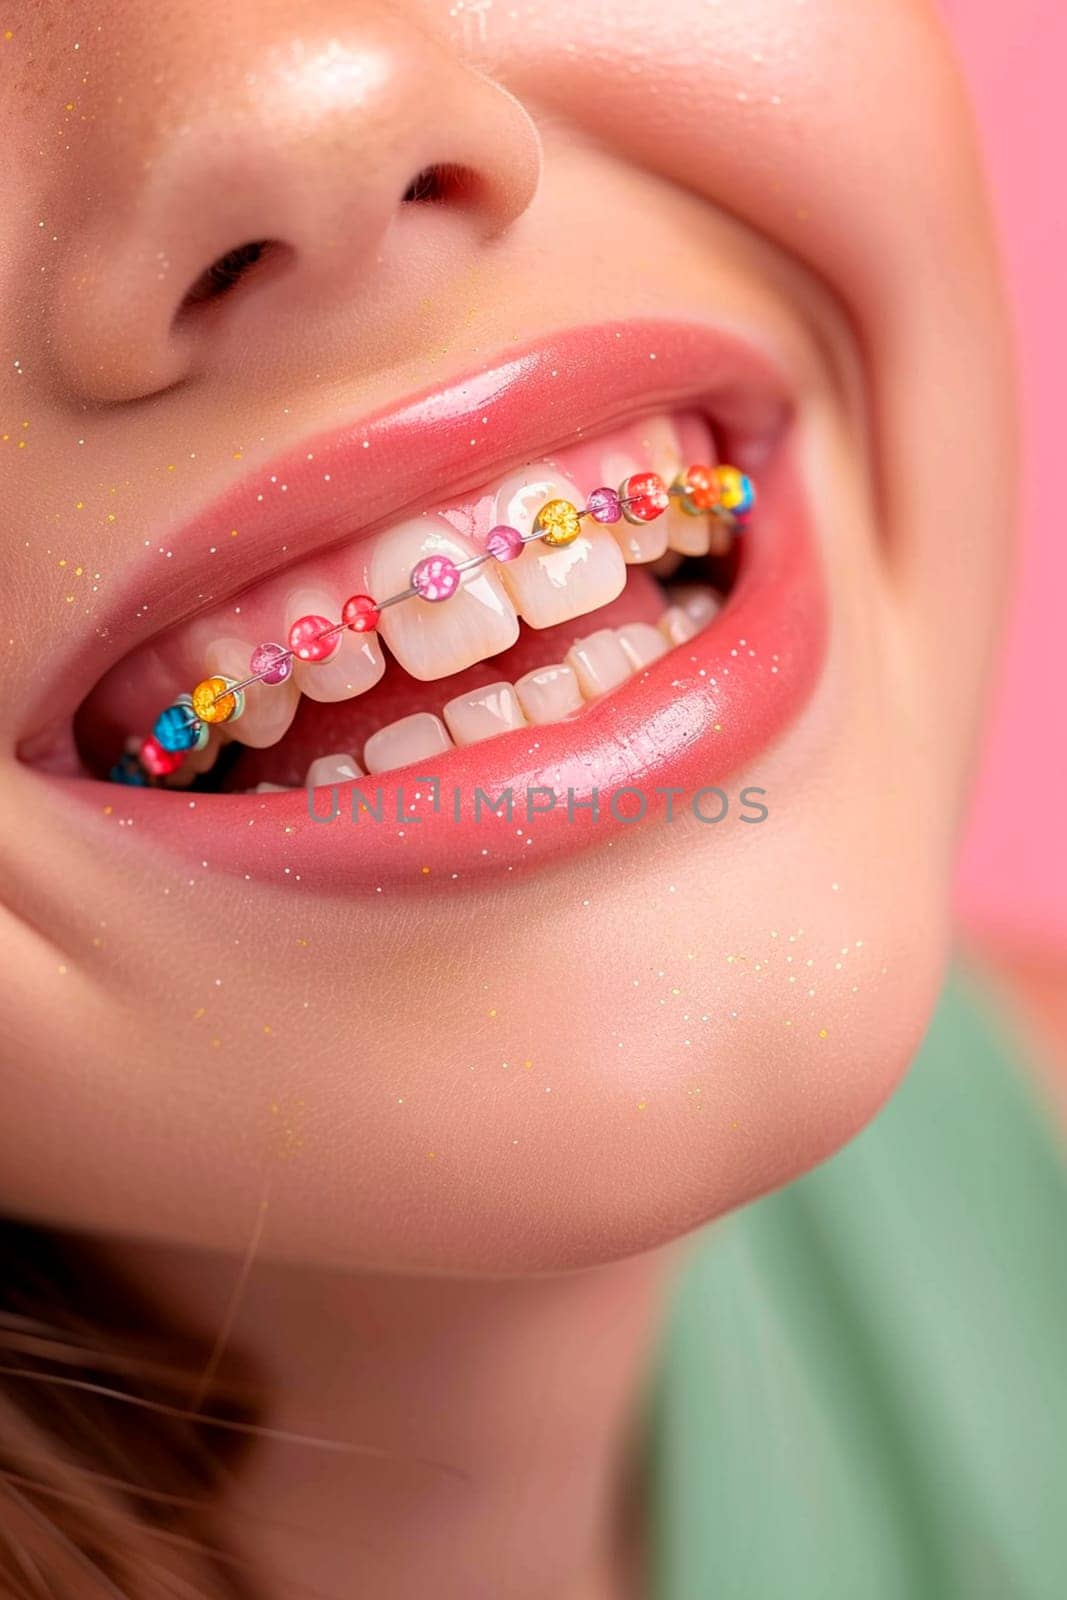 multi-colored braces smile child. Selective focus. happy.